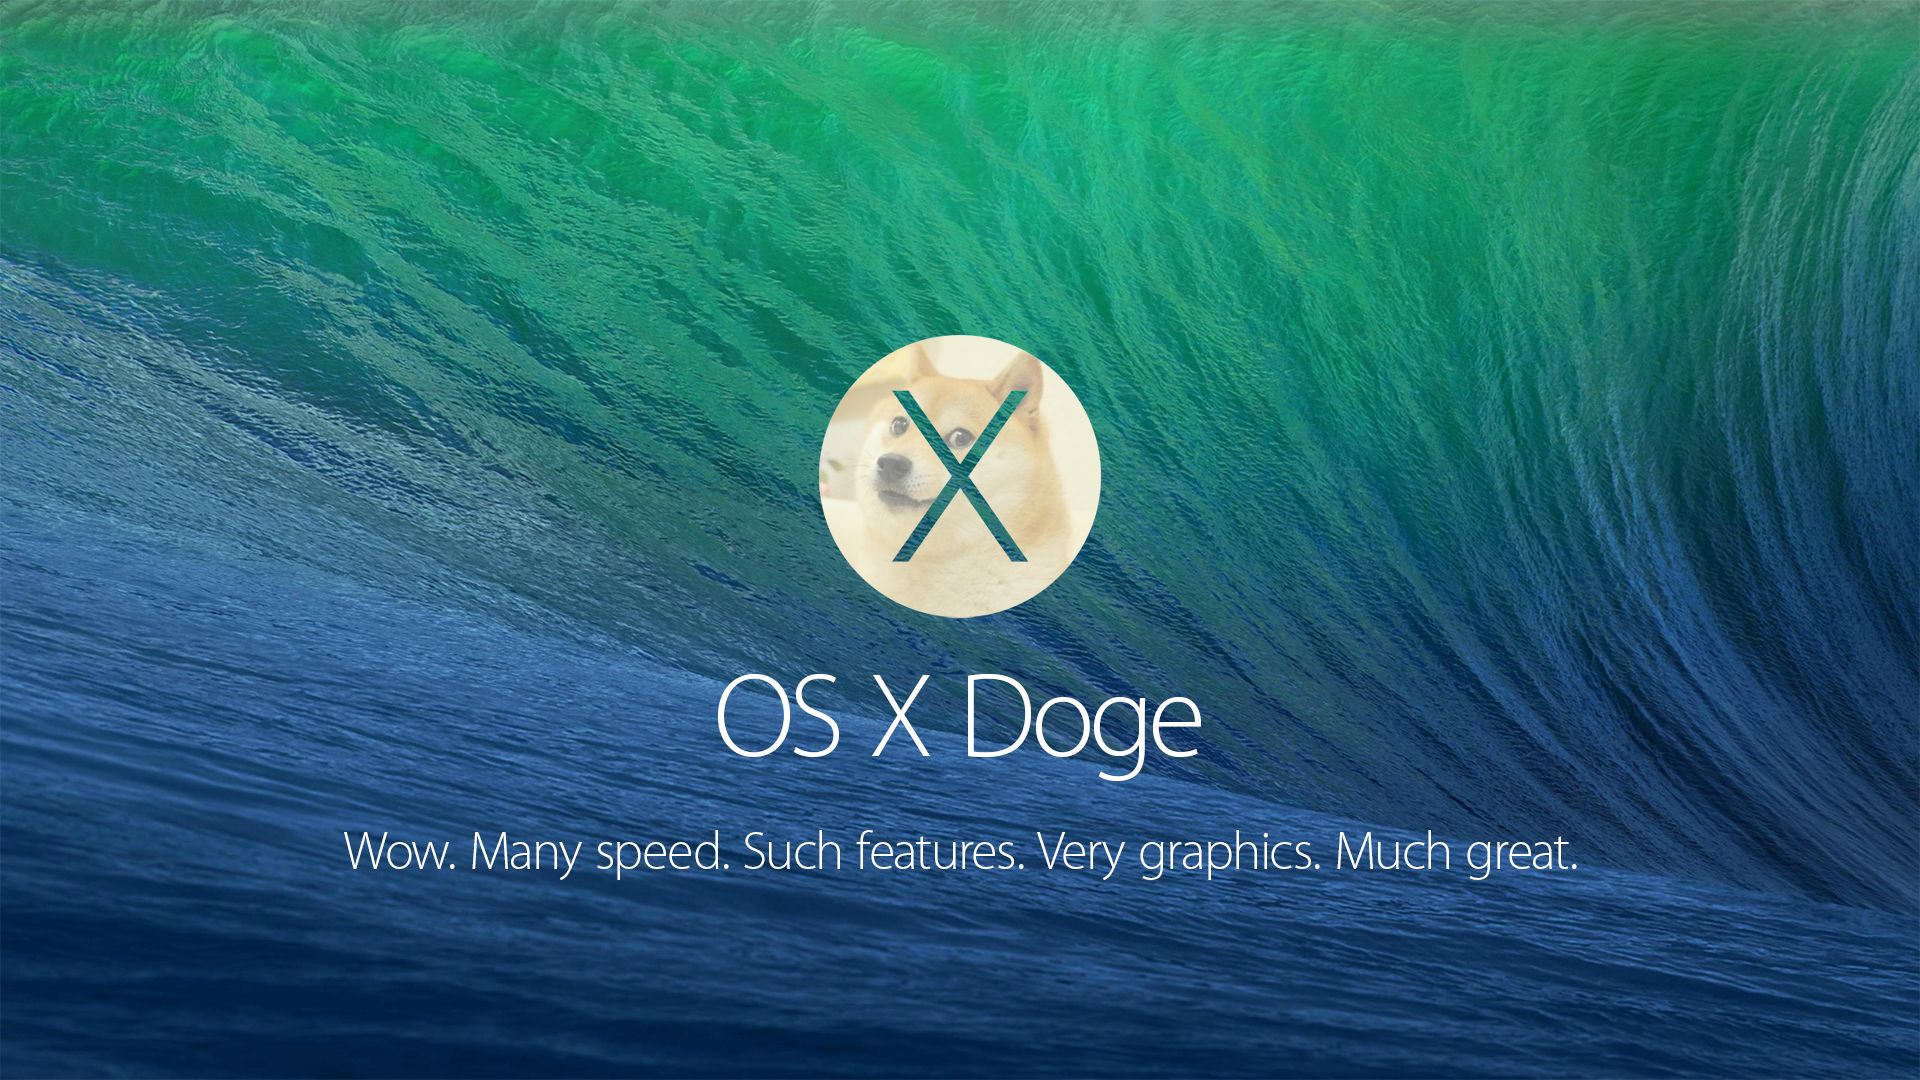 OSX DOGE Nexus 5 Wallpaper 1920x1080